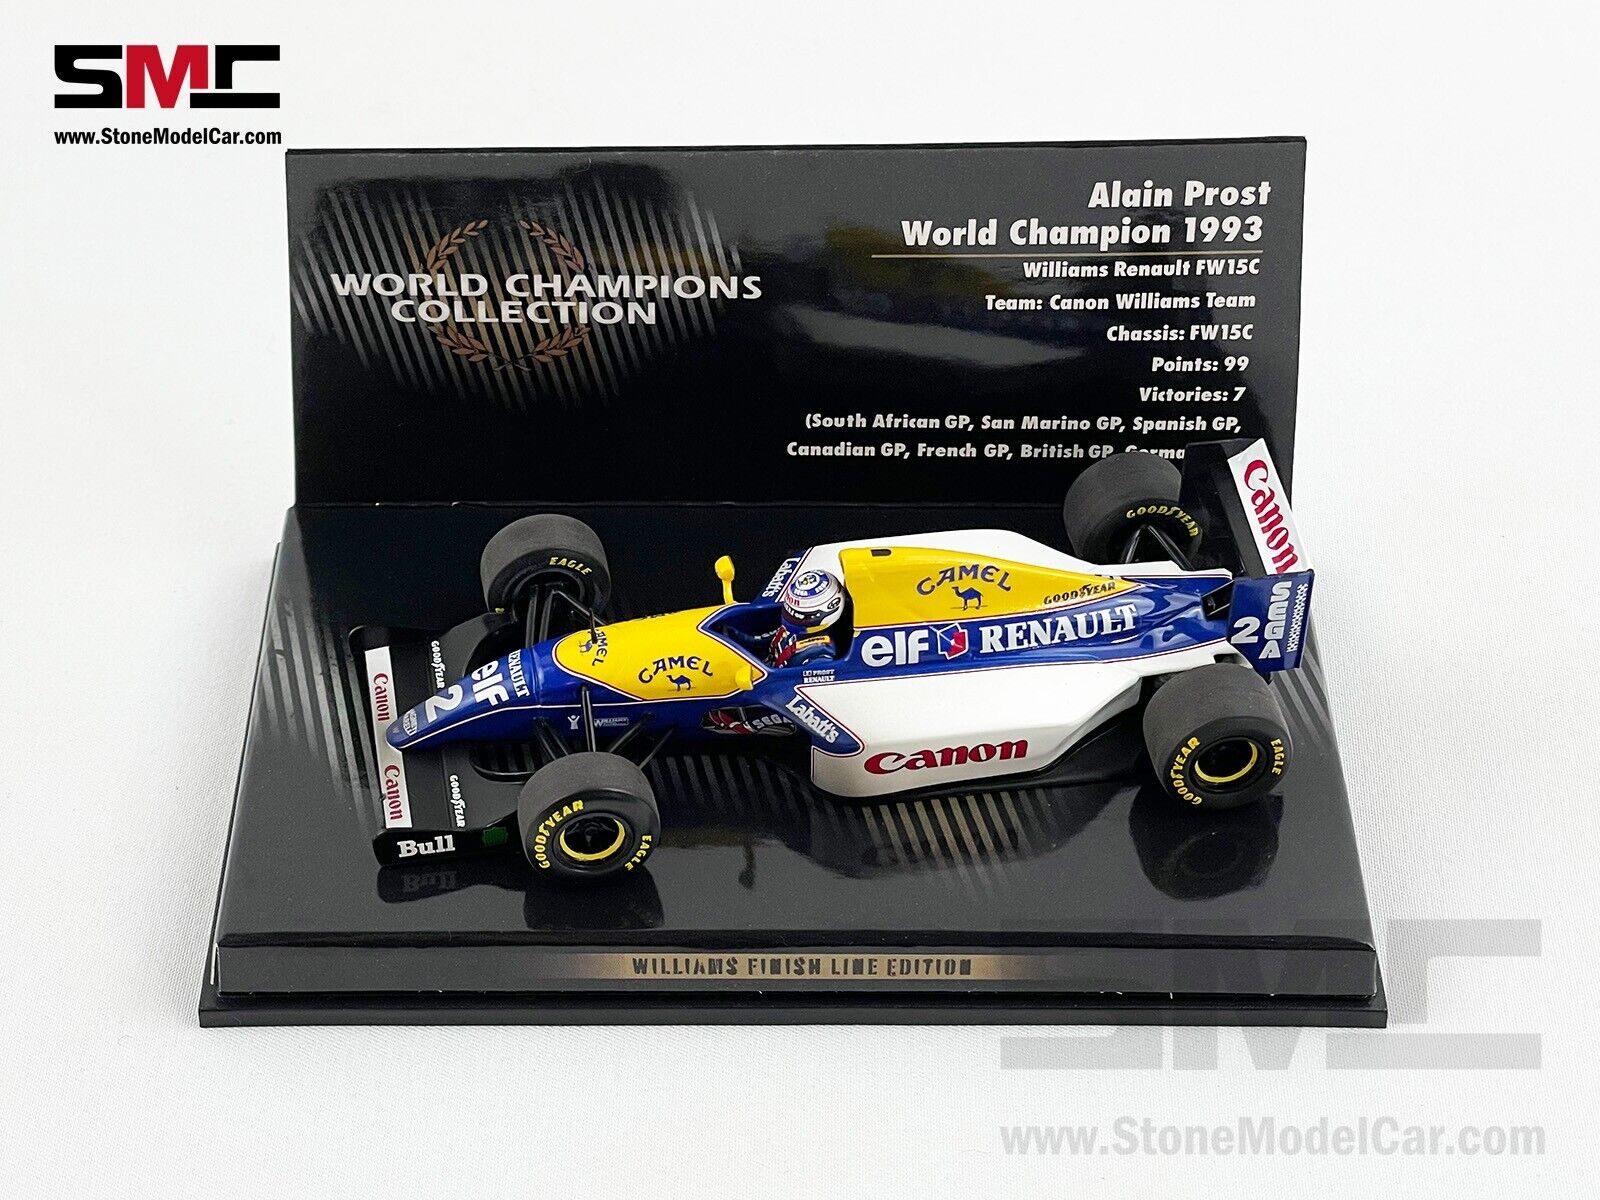 Williams F1 FW15C #2 Alain Prost 1993 World Champion 1:43 MINICHAMPS with CAMEL